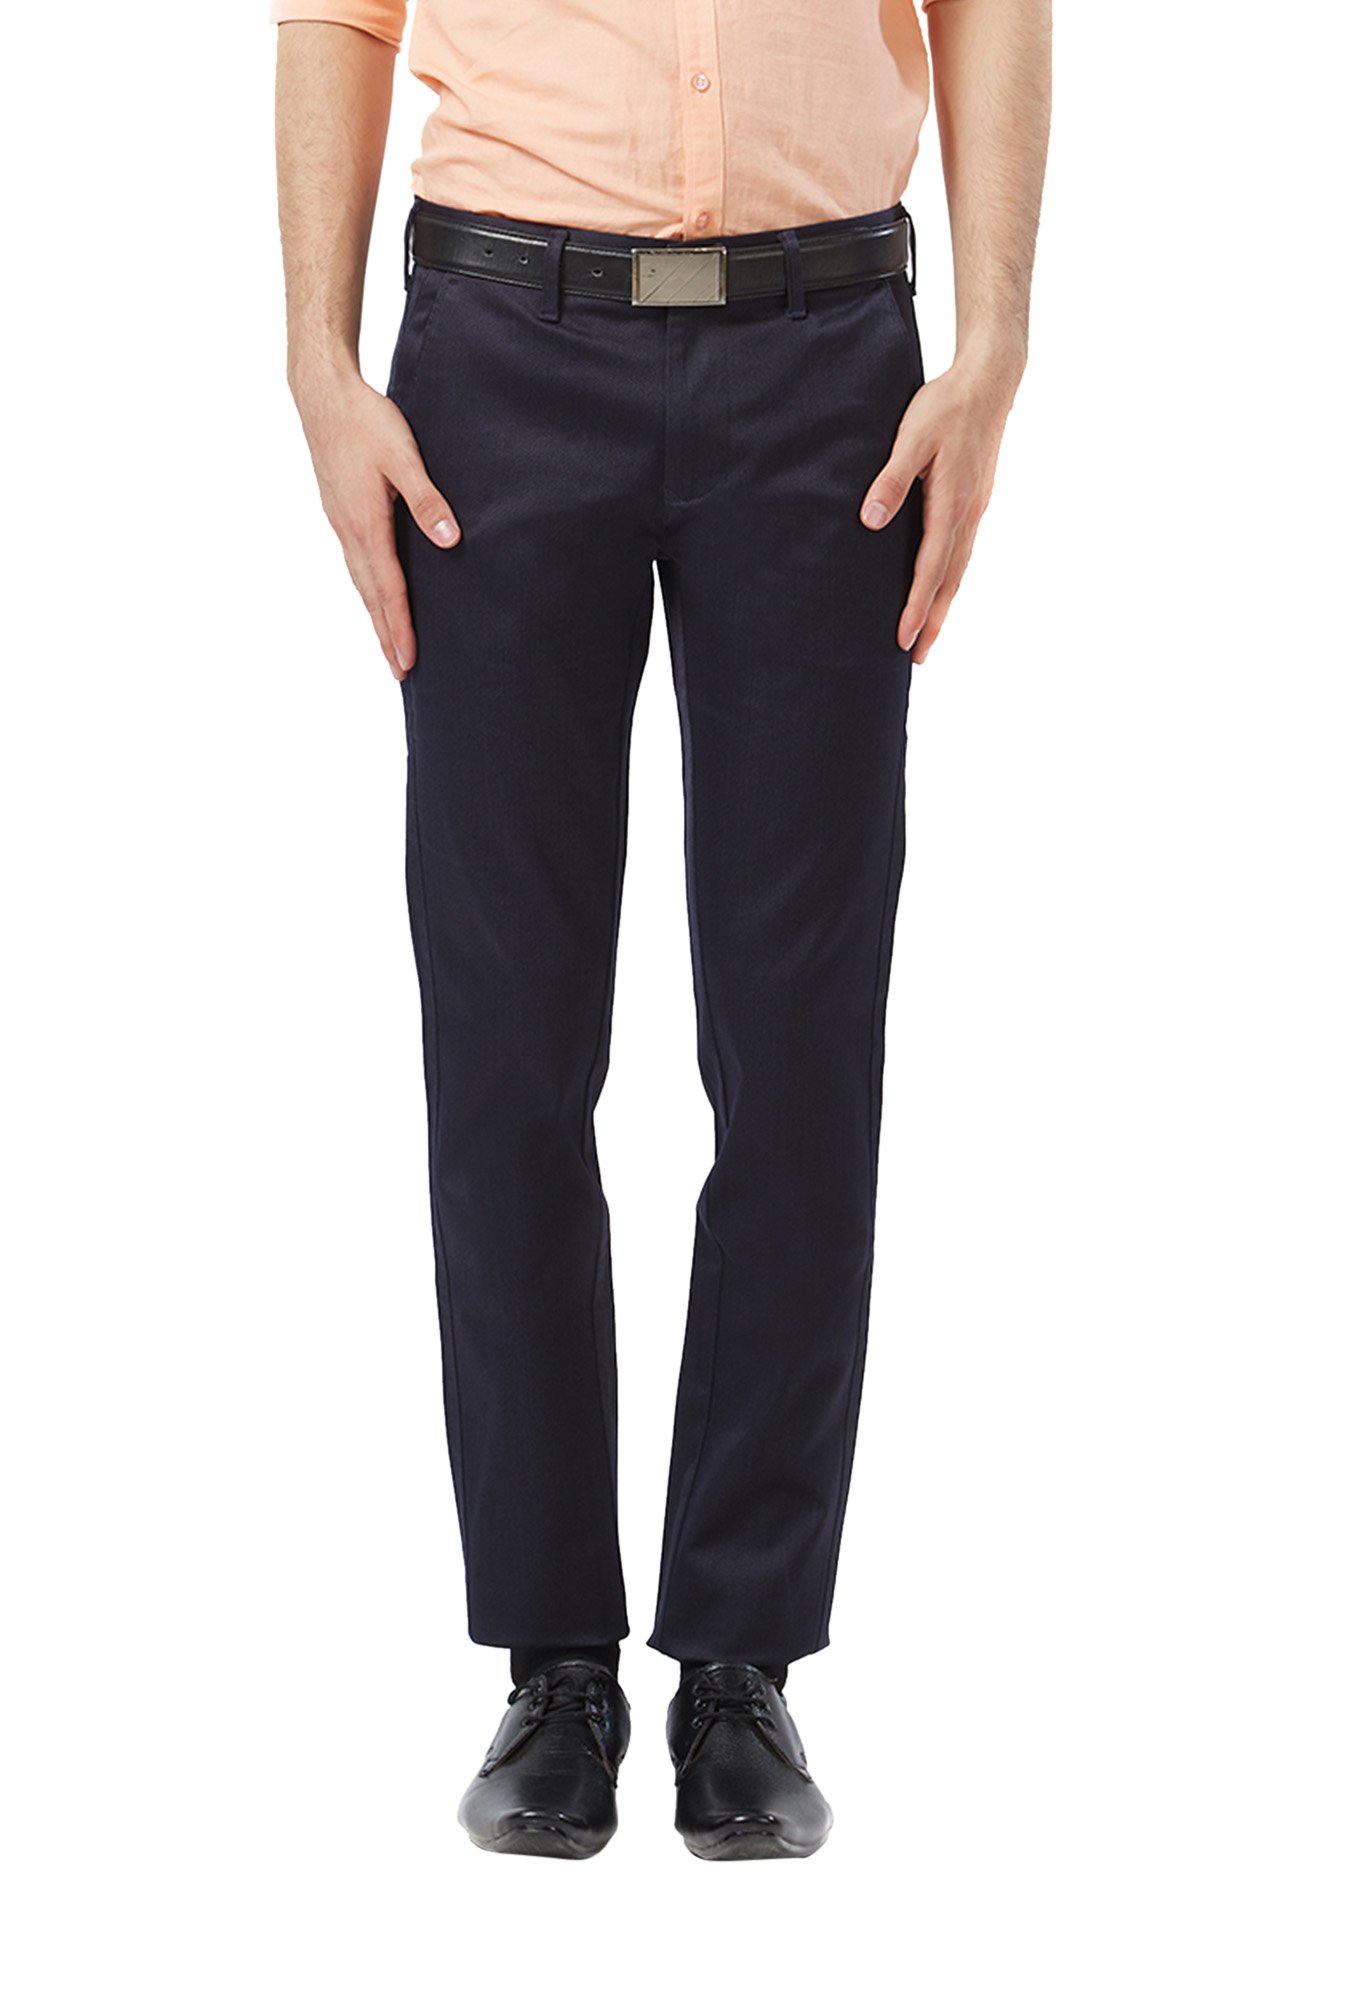 Buy MidRise Slim Fit FlatFront Trousers online  Looksgudin